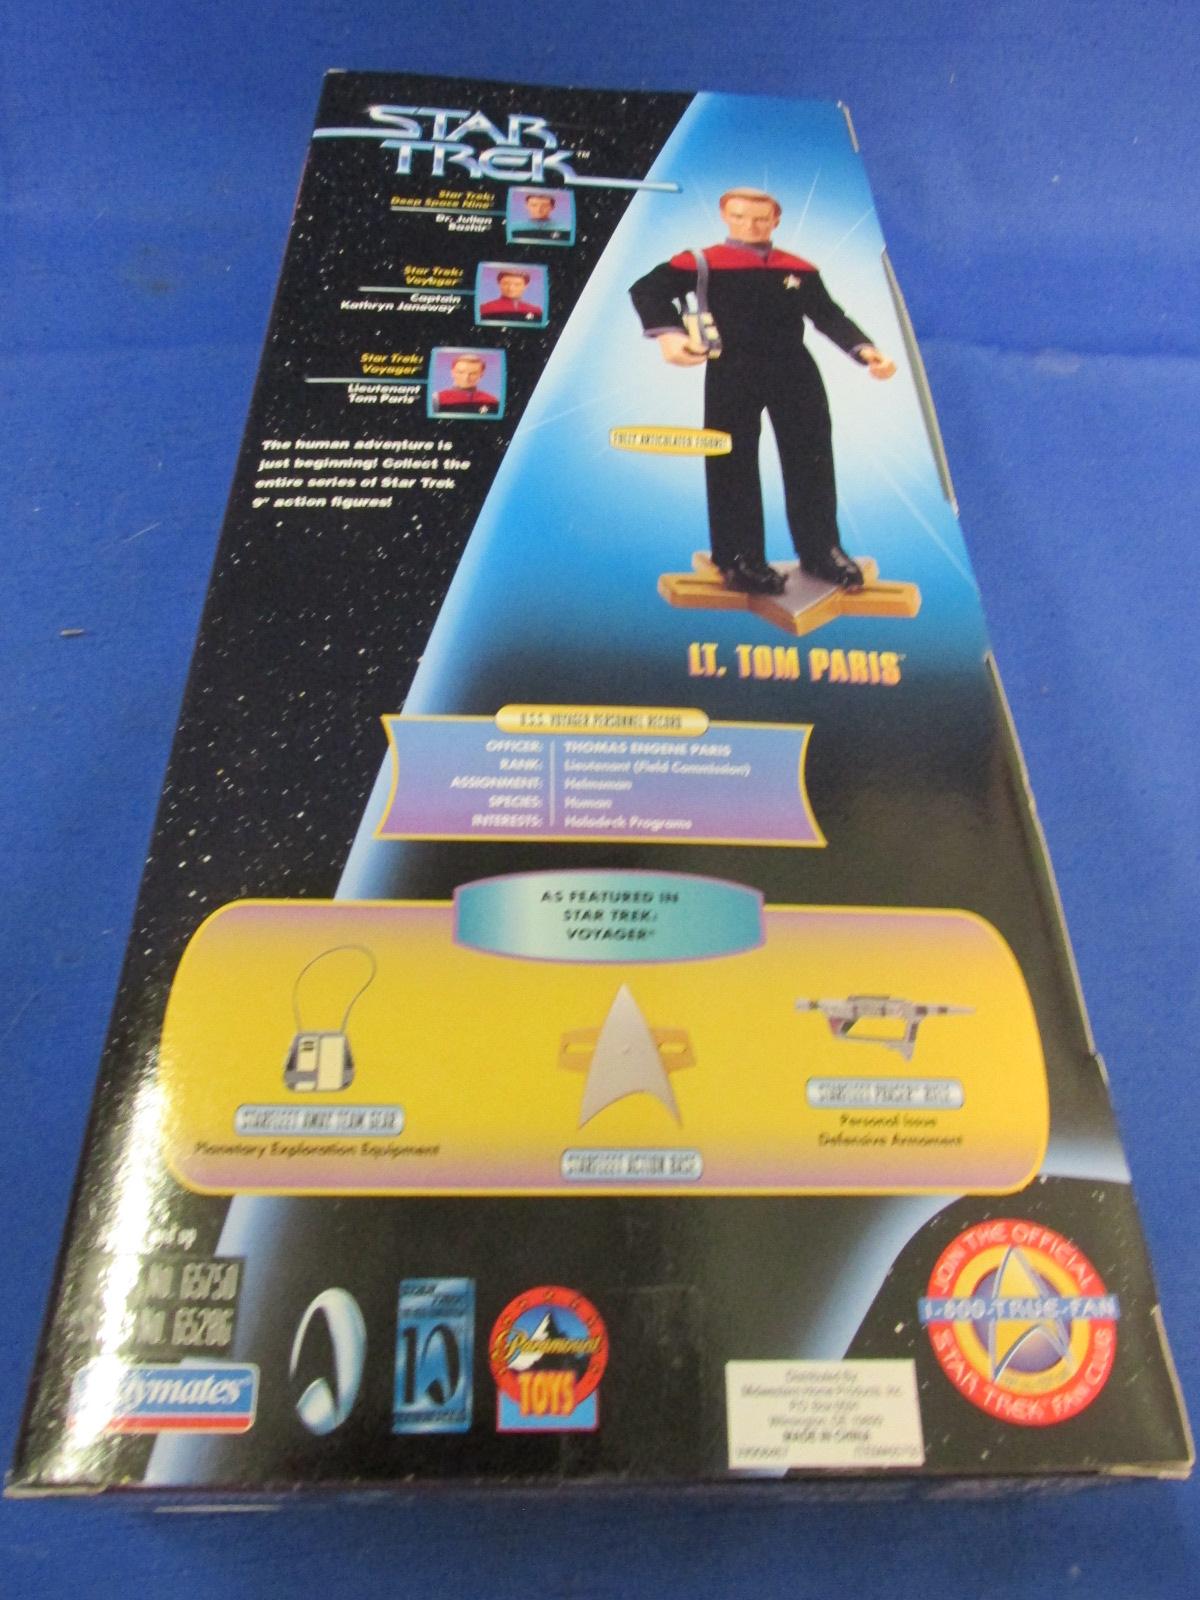 Star Trek – 9” Figure – NIB -  Warp Factor Series 2 – Lt. Tom Paris